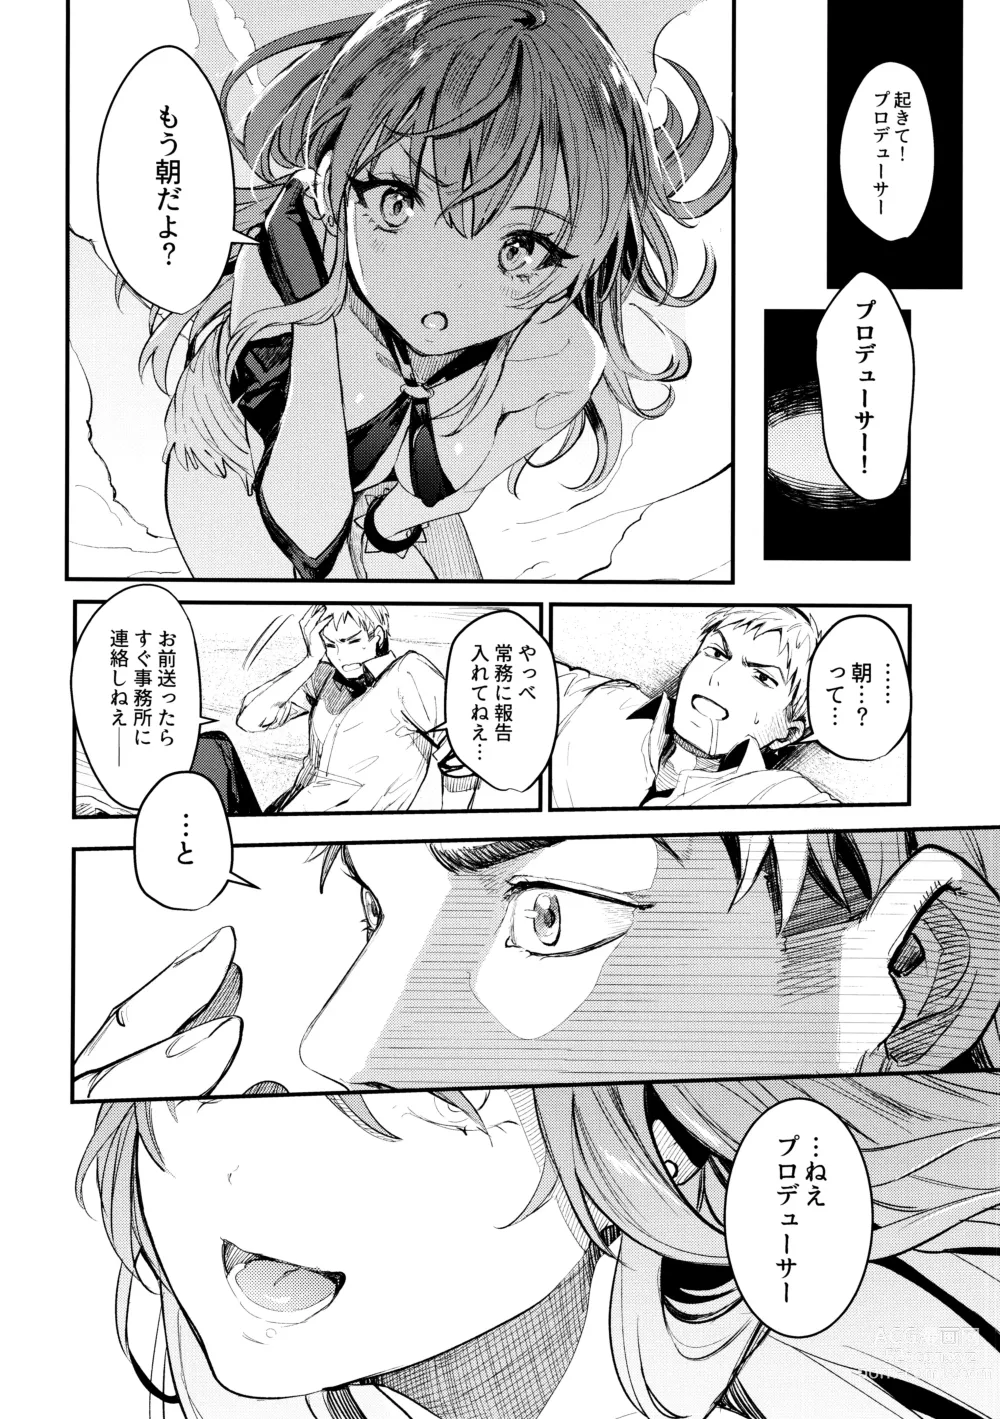 Page 27 of doujinshi Mika to Futari de.